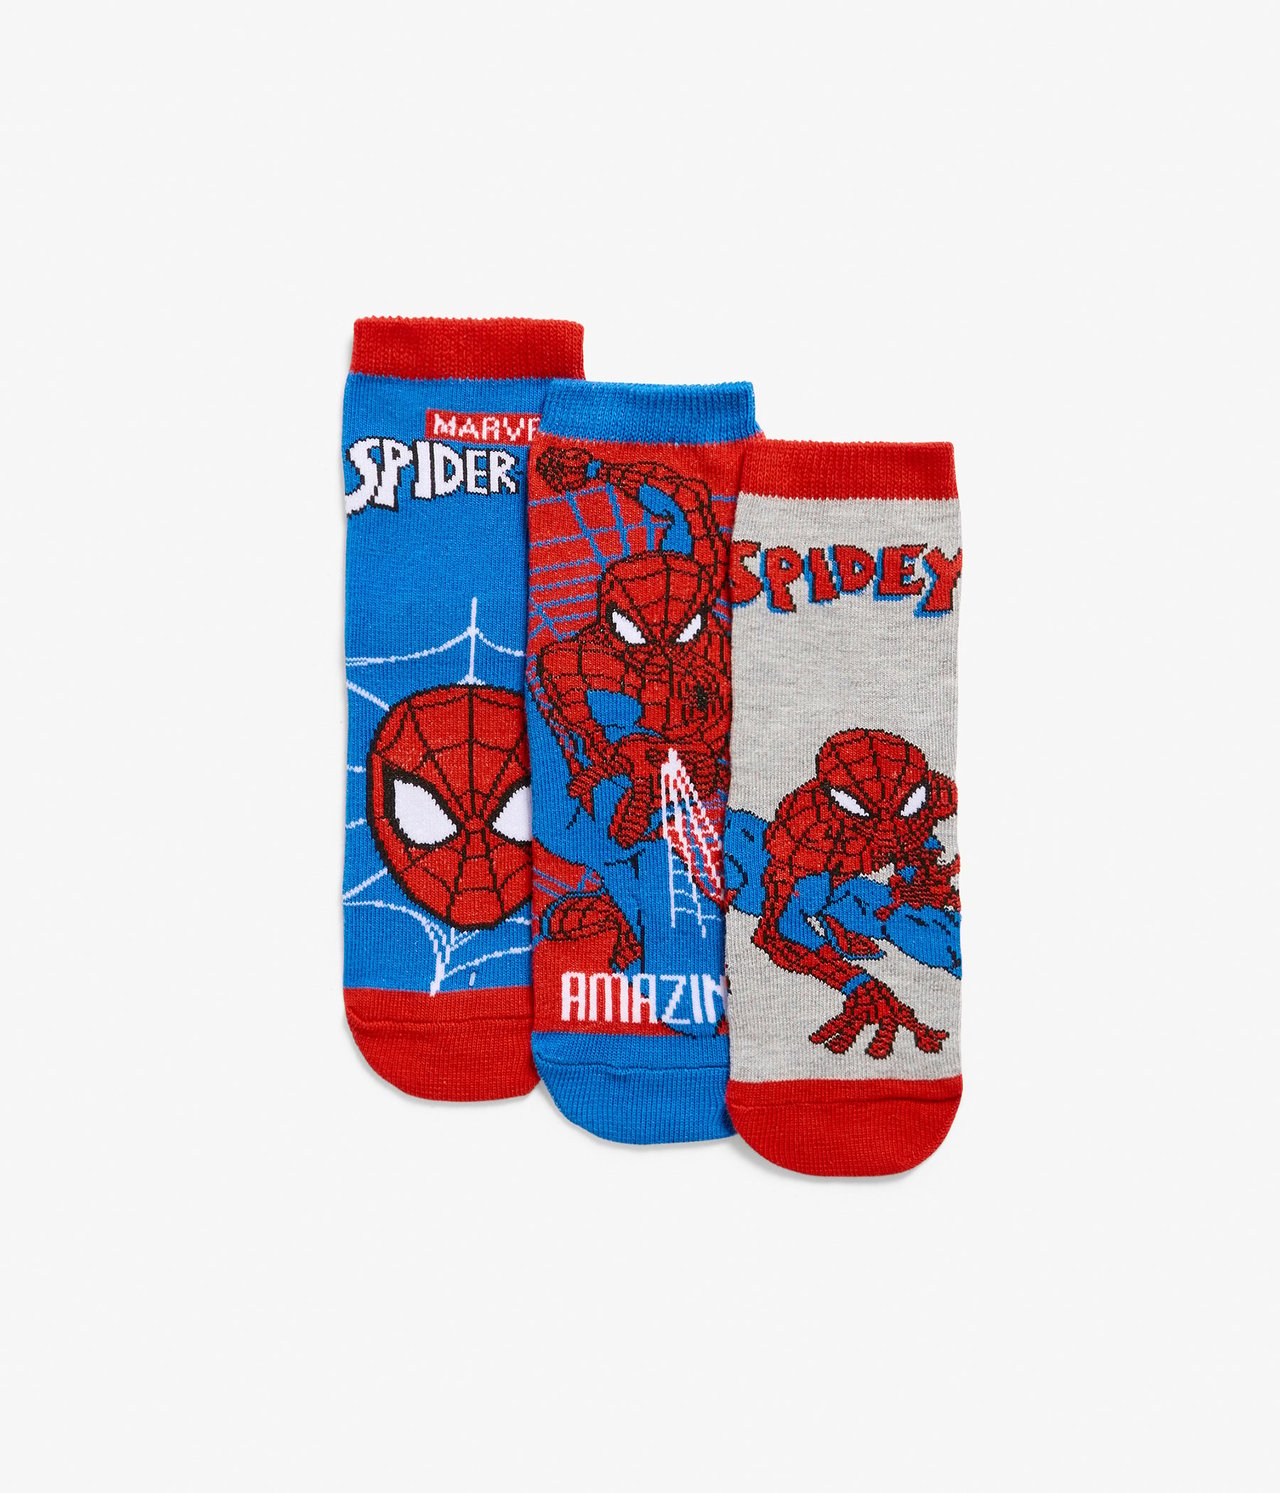 Hämähäkkimies-sukat, 3 parin pakkaus